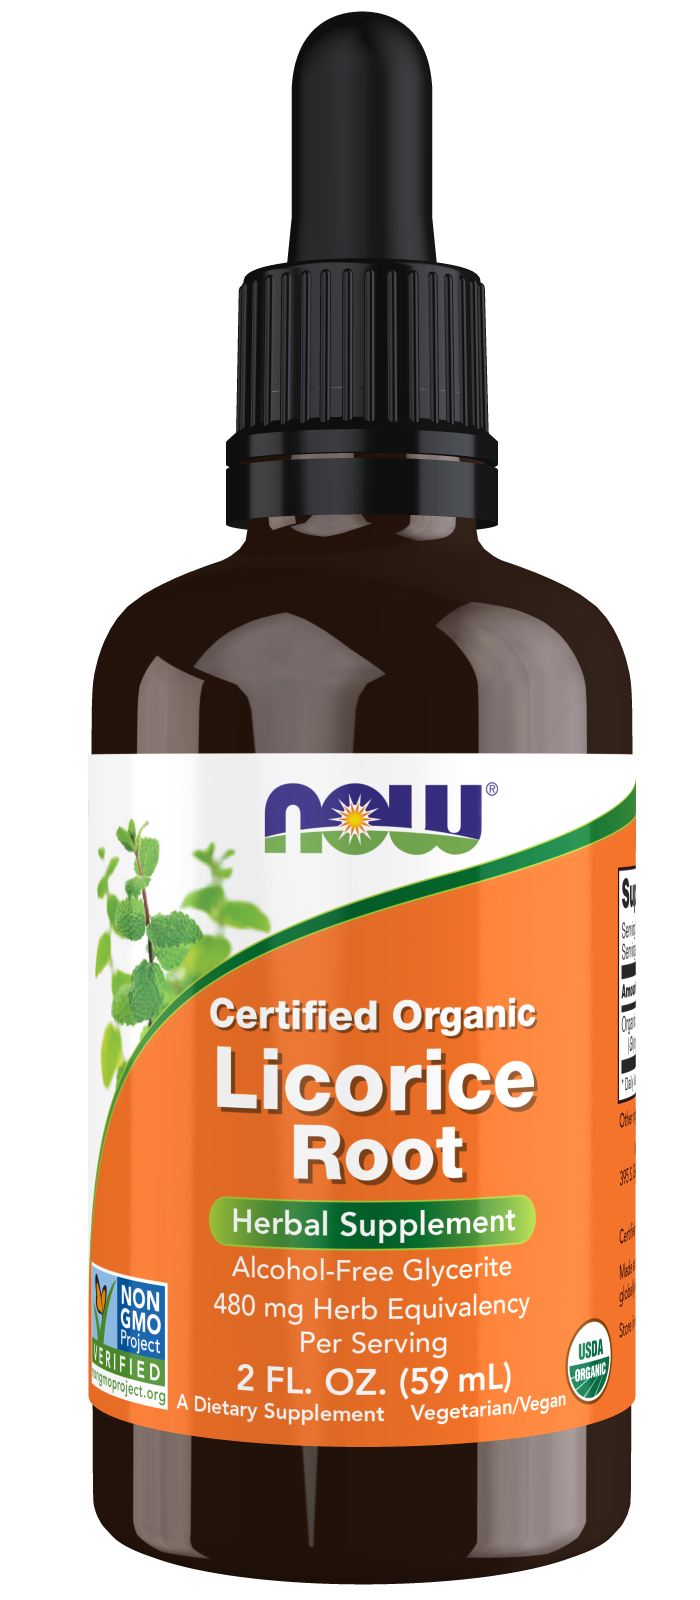 Licorice Root Glycerite, Organic - 2 fl. oz. Bottle Front